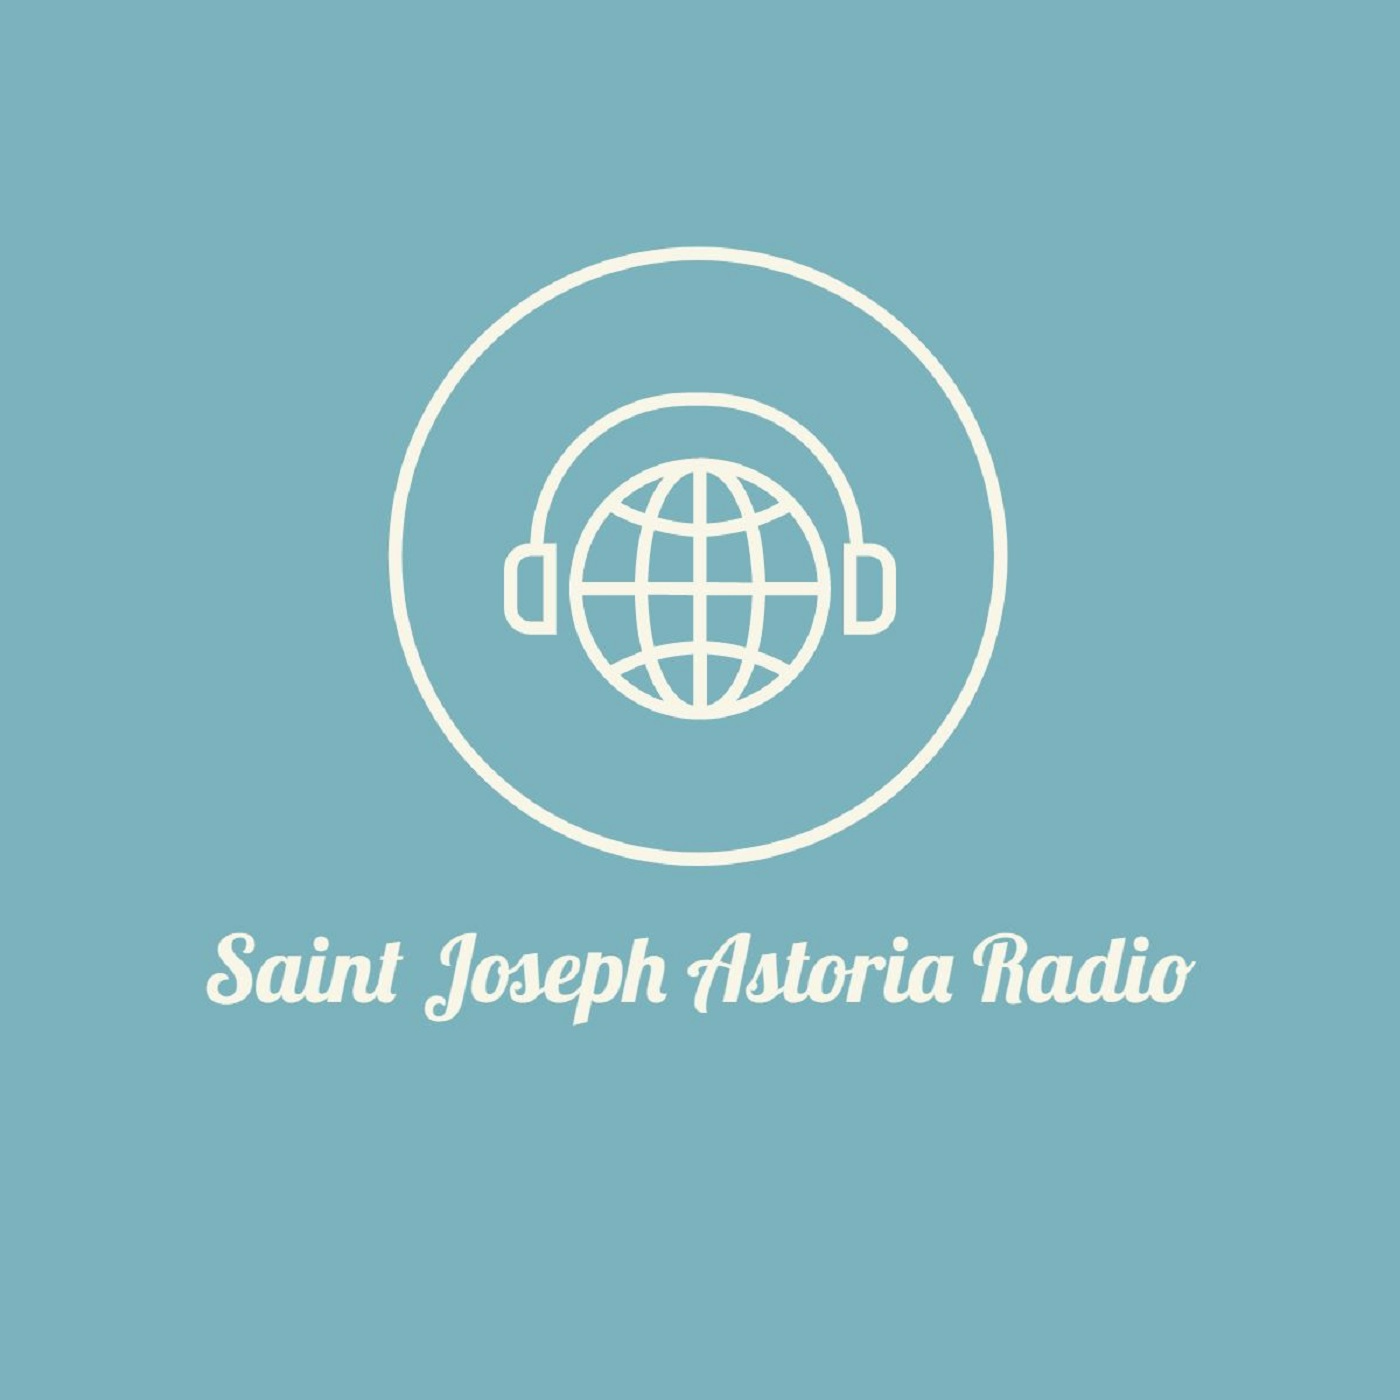 Saint Joseph Astoria Radio